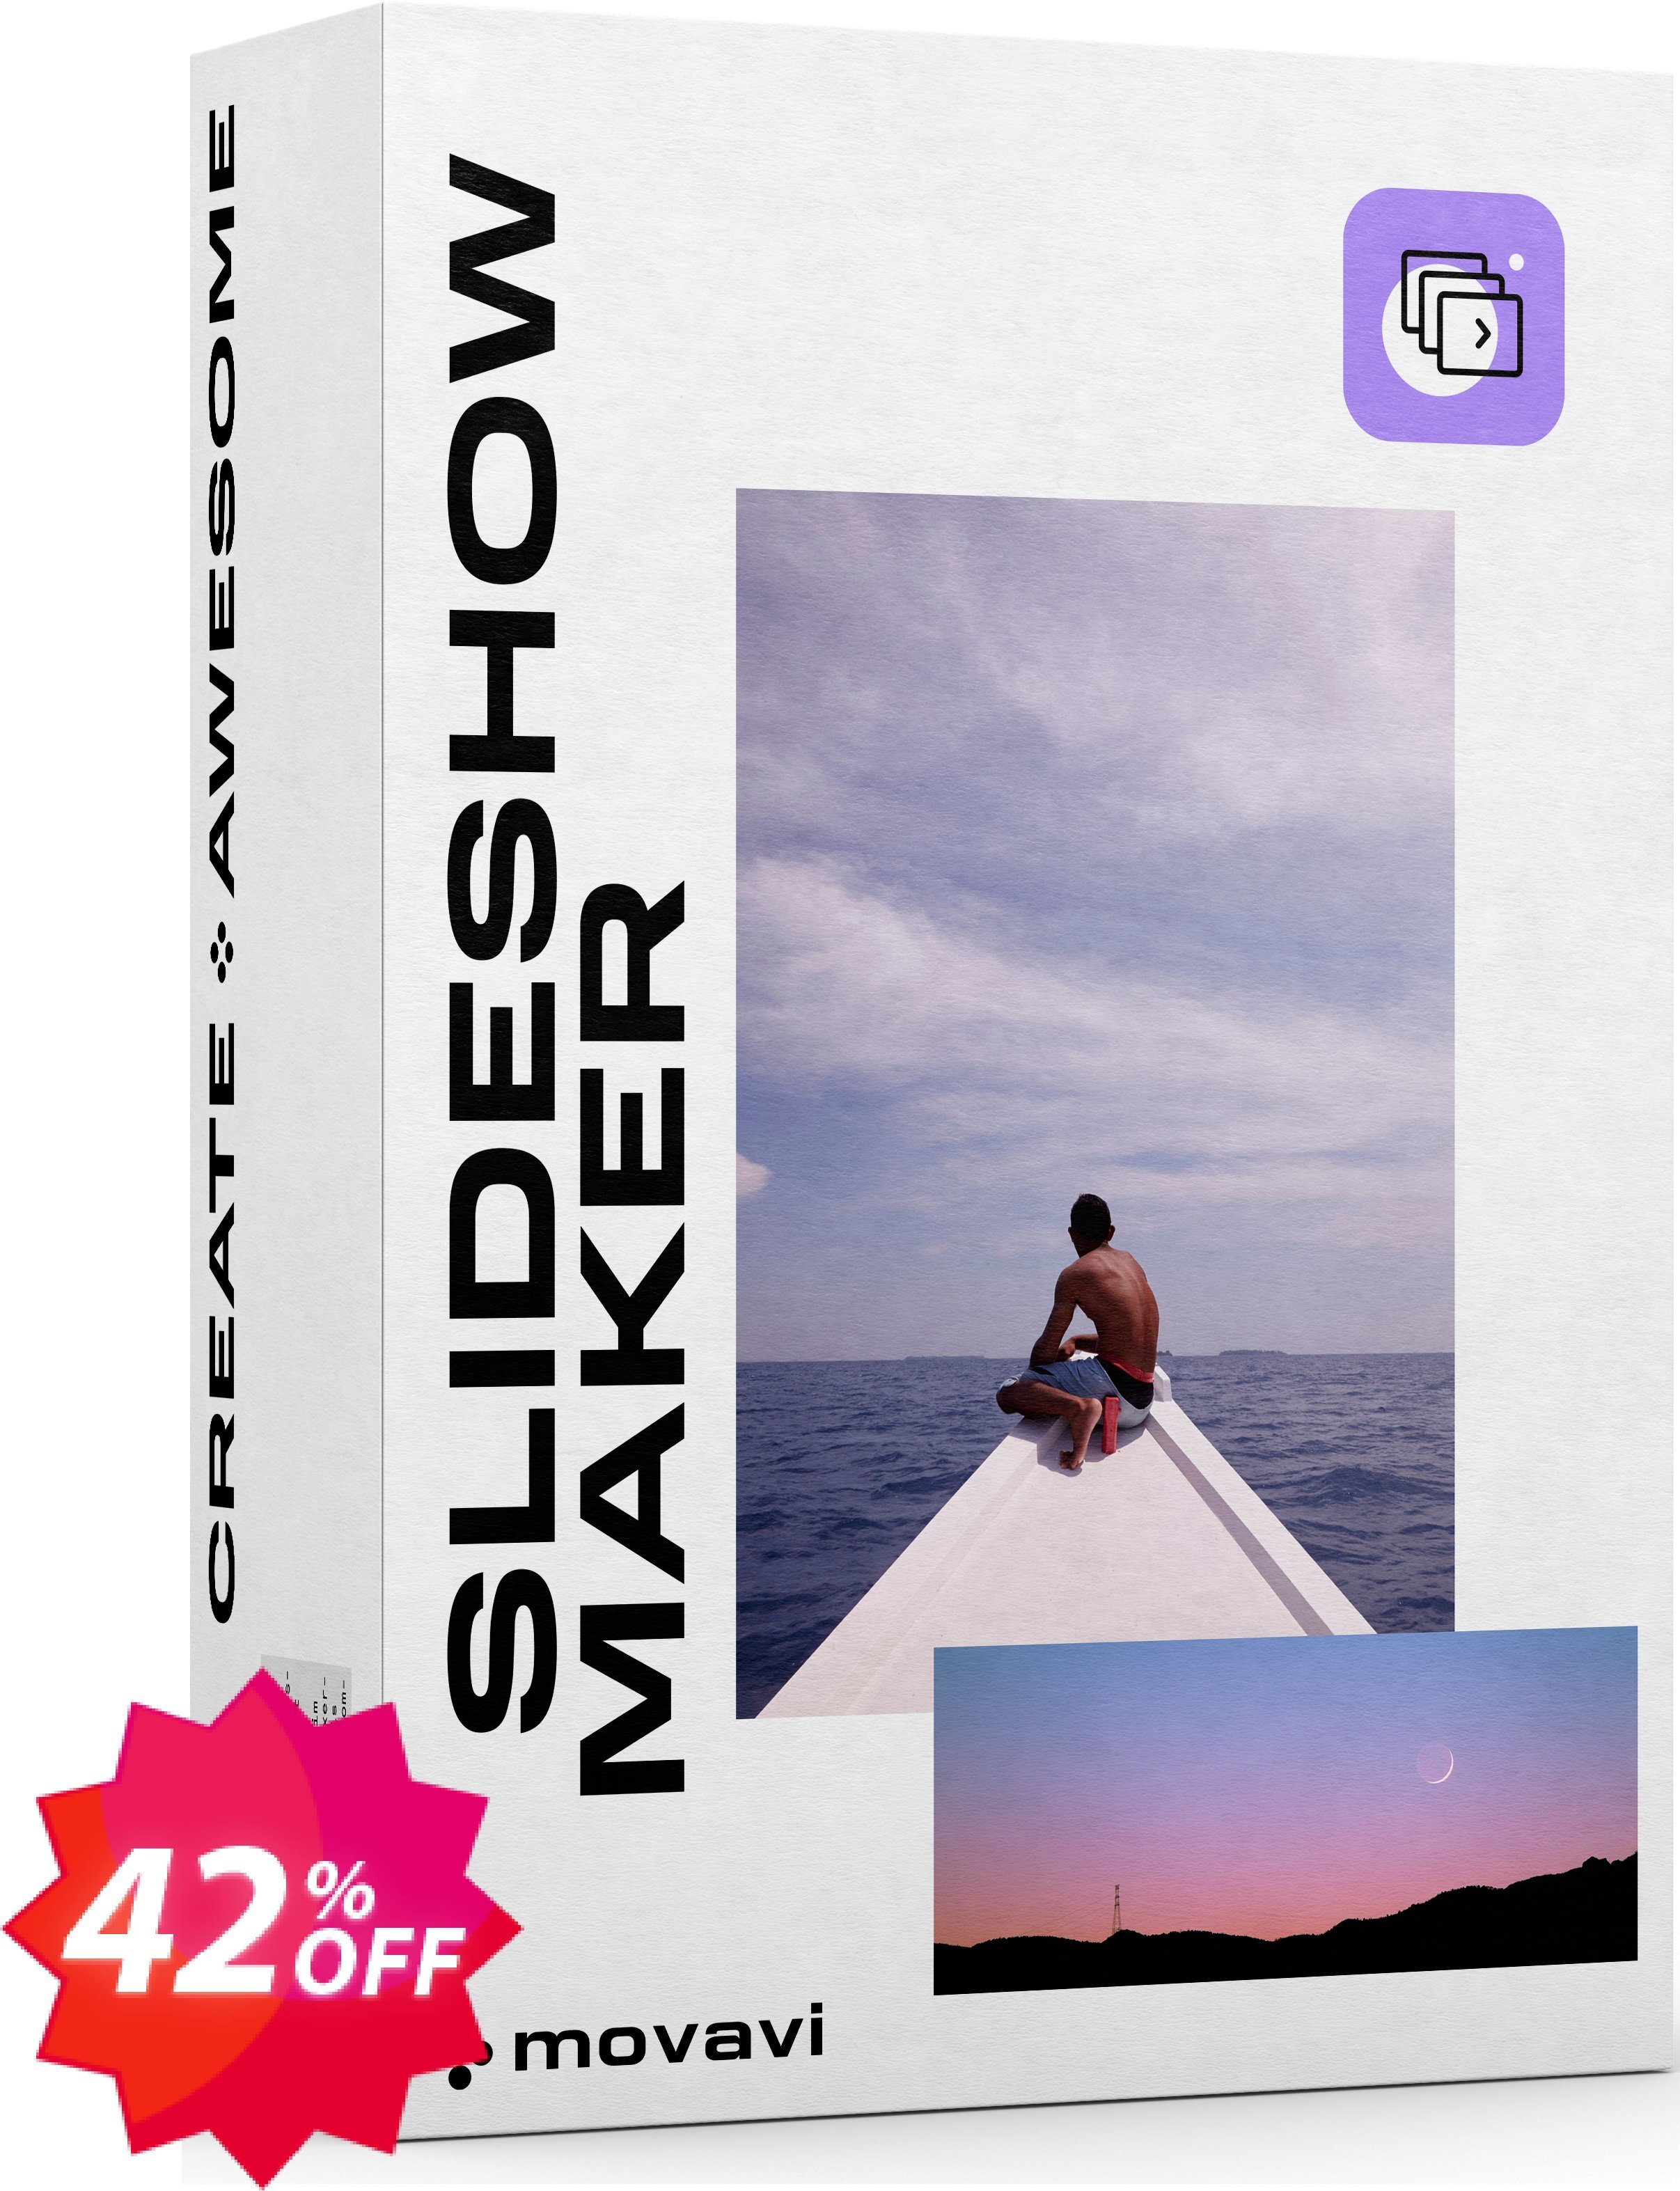 Movavi Slideshow Maker Coupon code 42% discount 